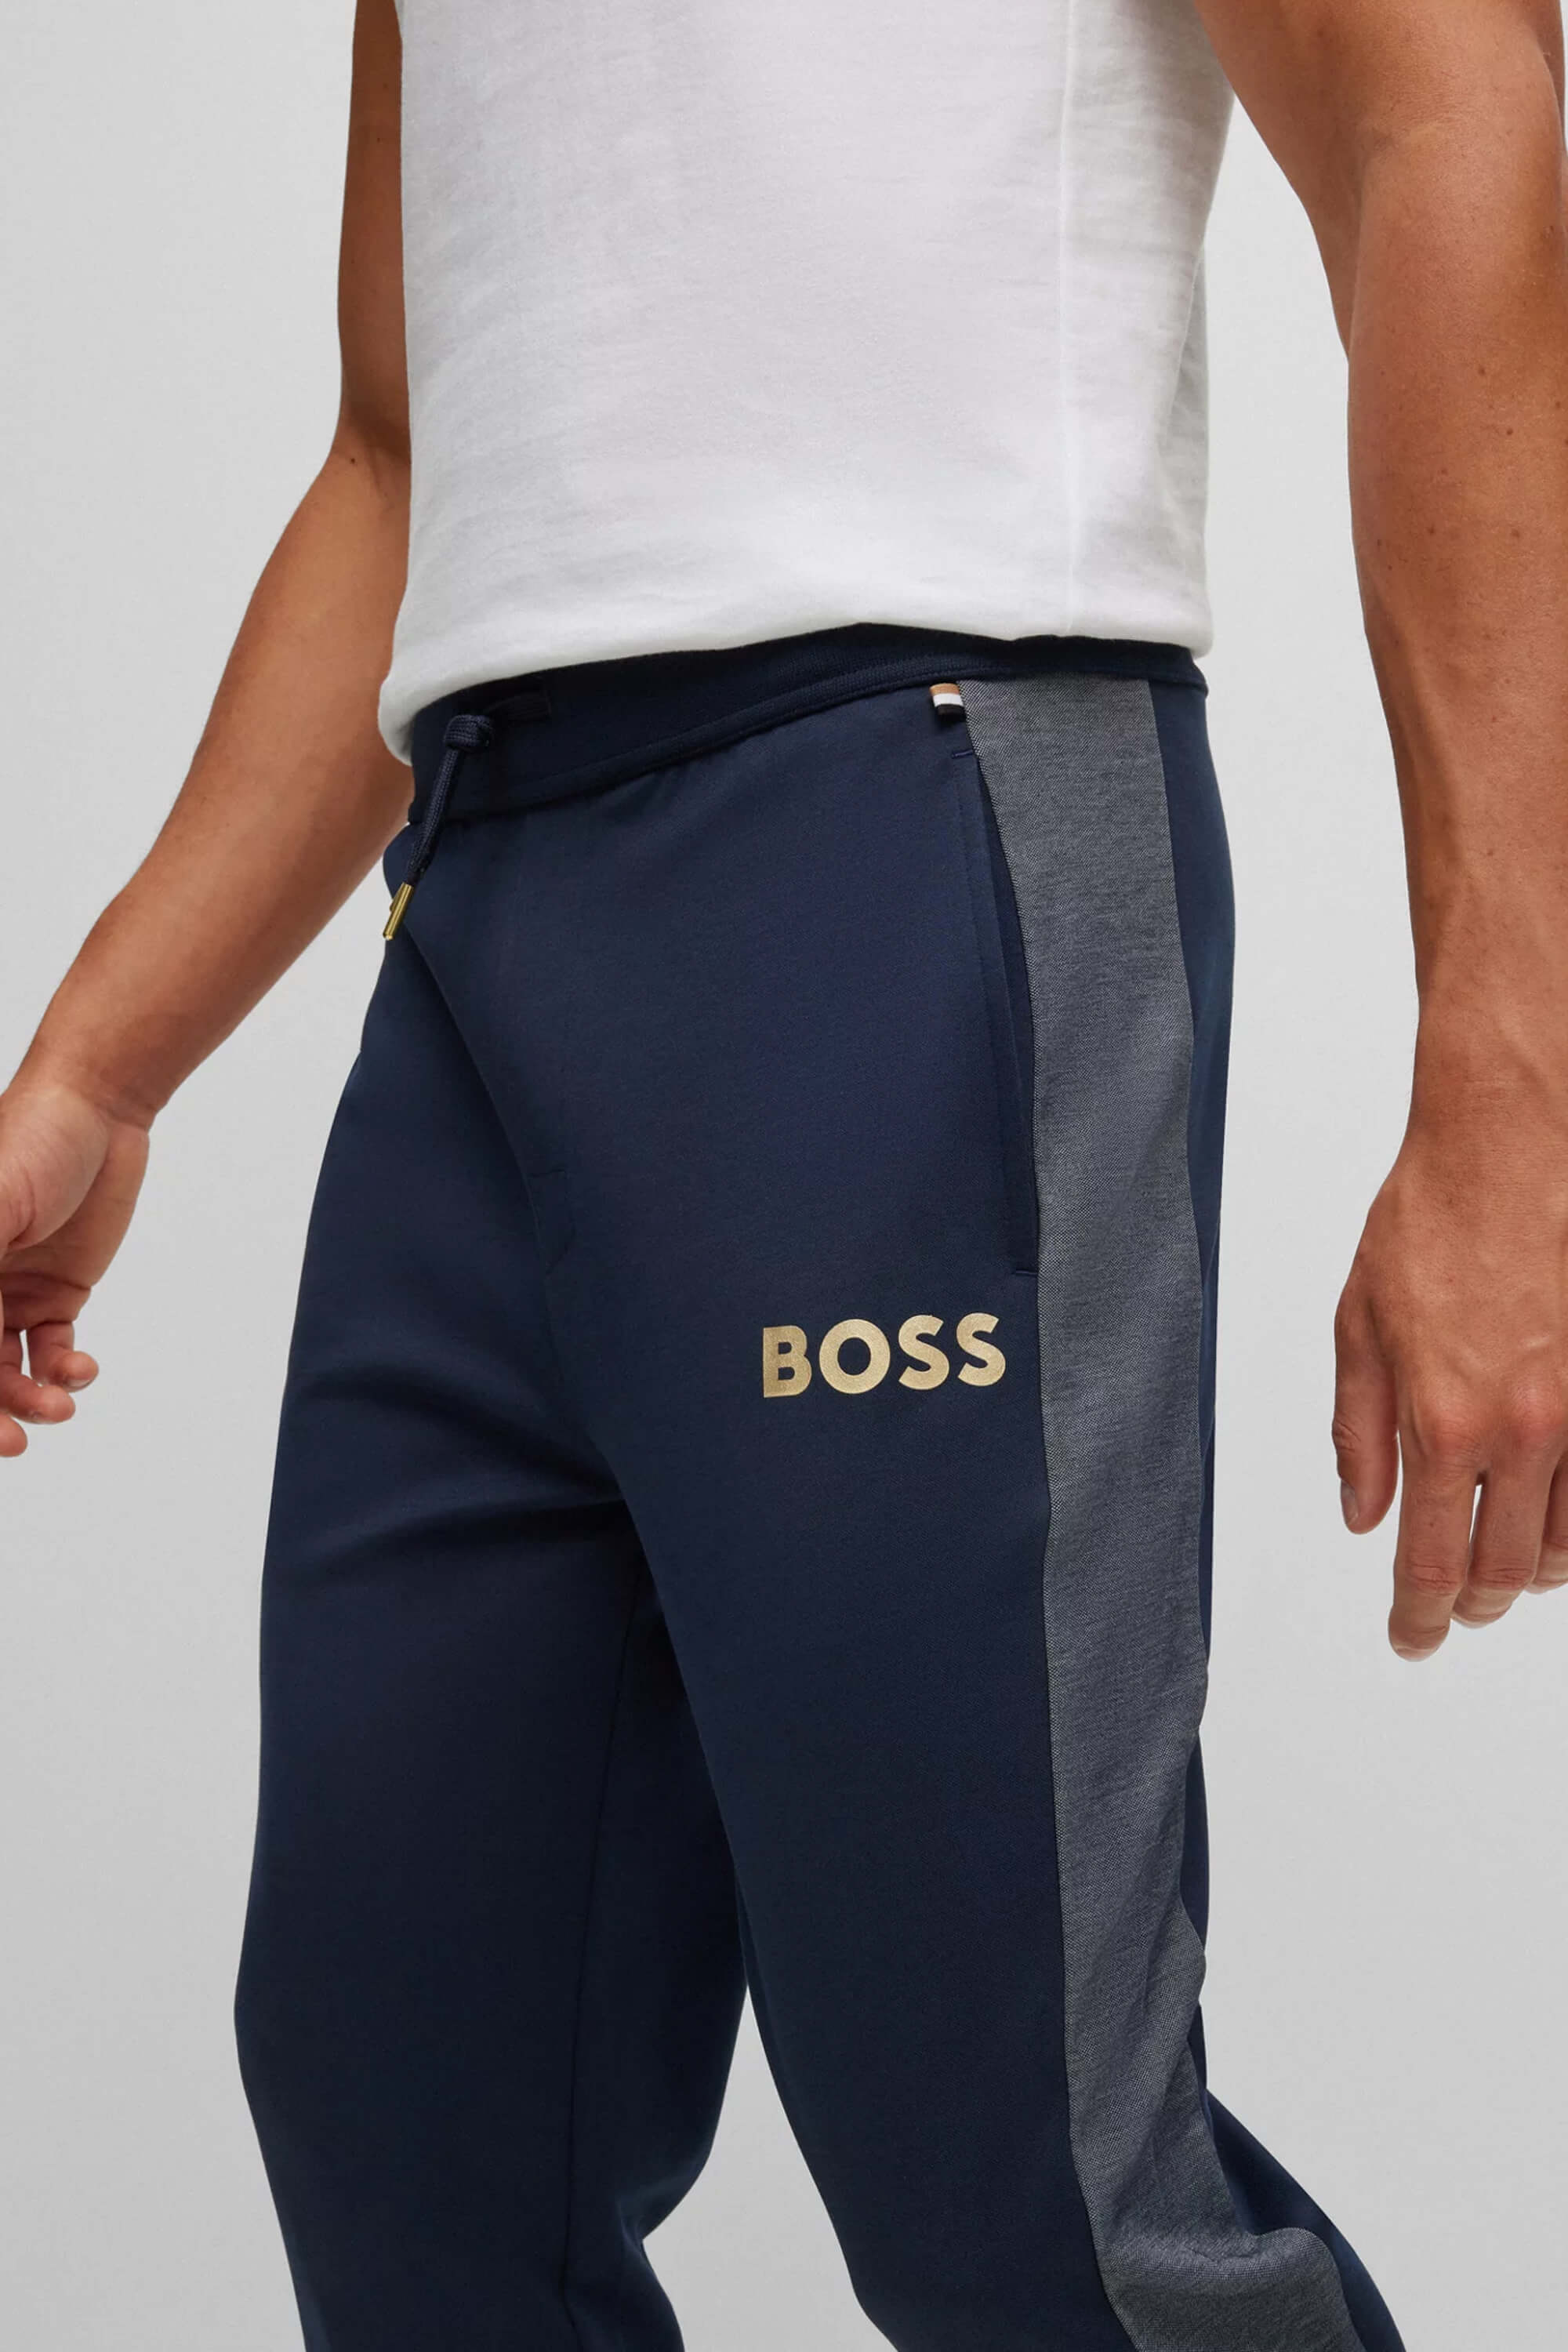 Hugo Boss | Pants | Hugo Boss Track Pants Medium Black Red Nwt | Poshmark